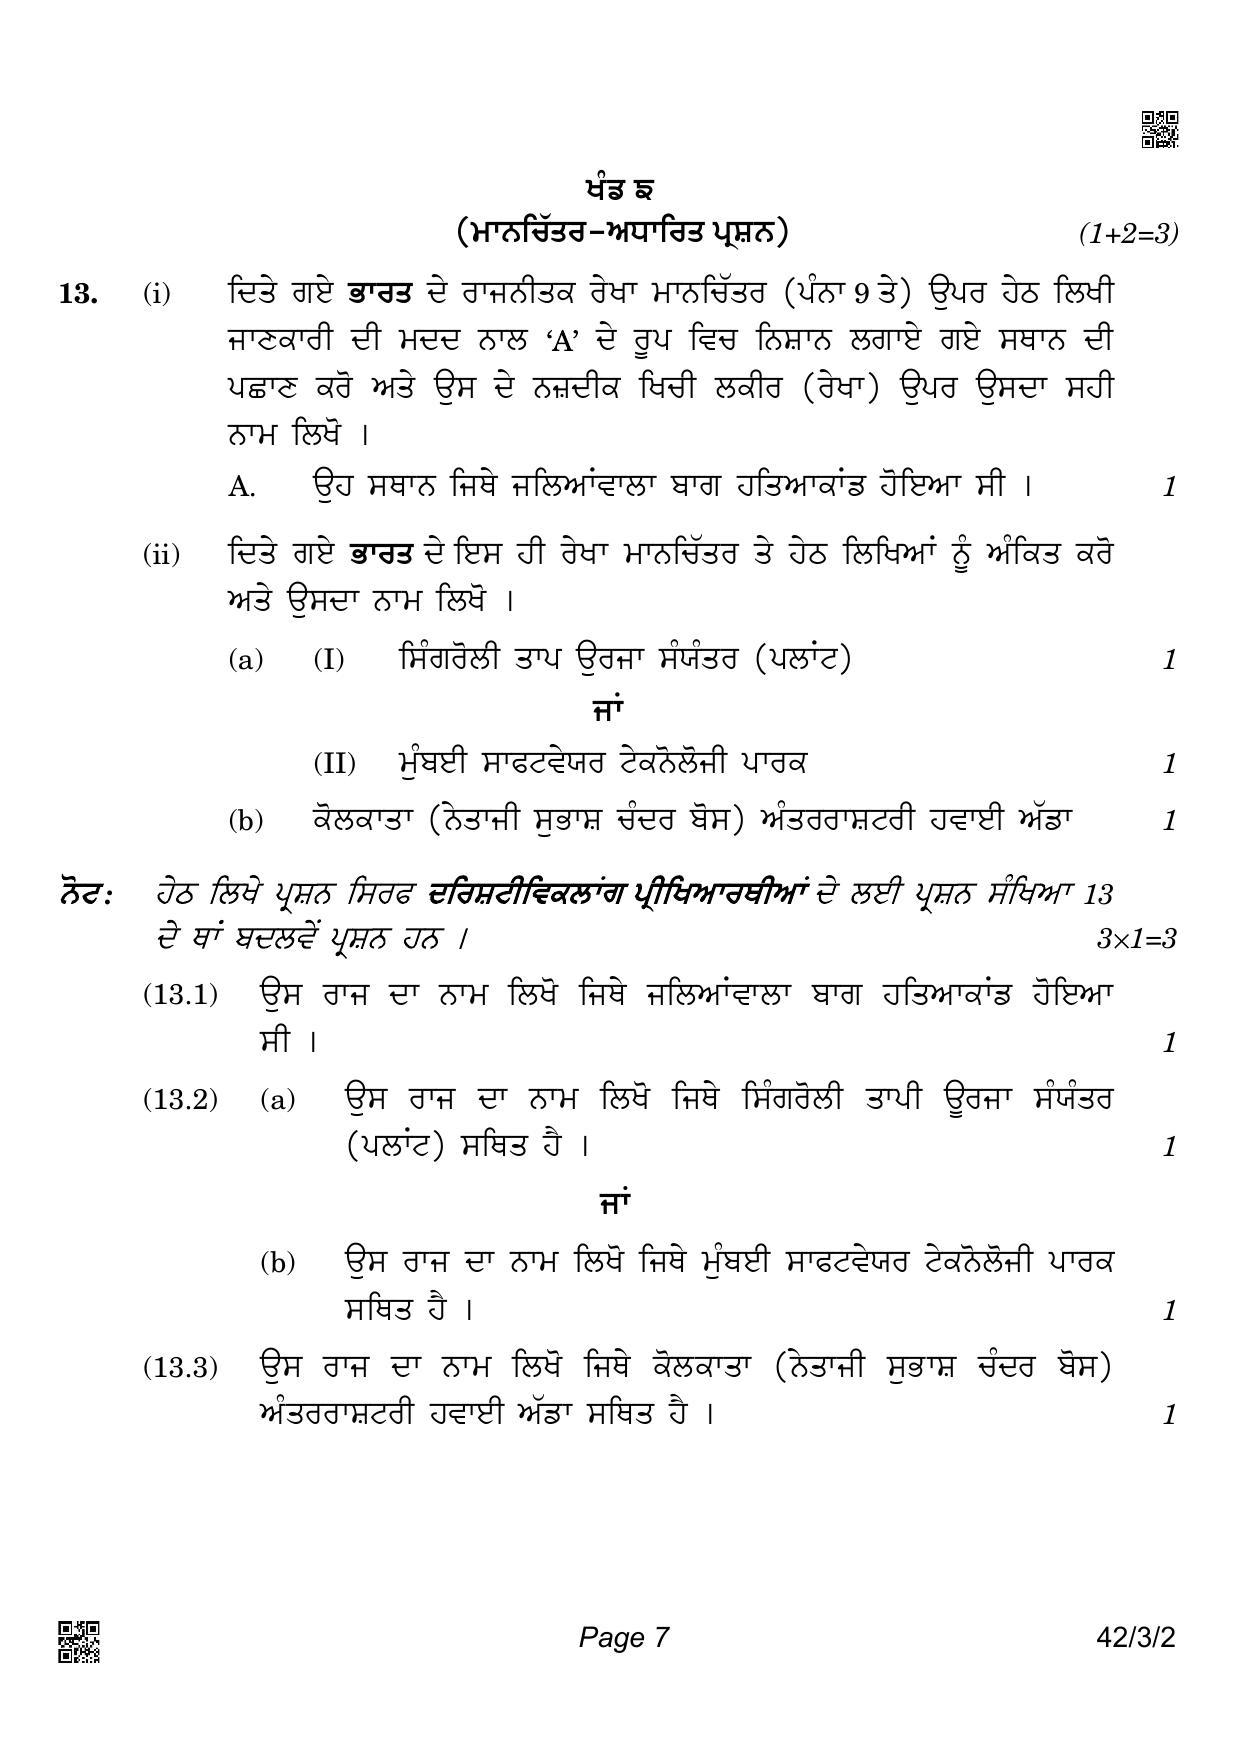 CBSE Class 10 42-3-2 Social Science Punjabi Version 2022 Question Paper - Page 7